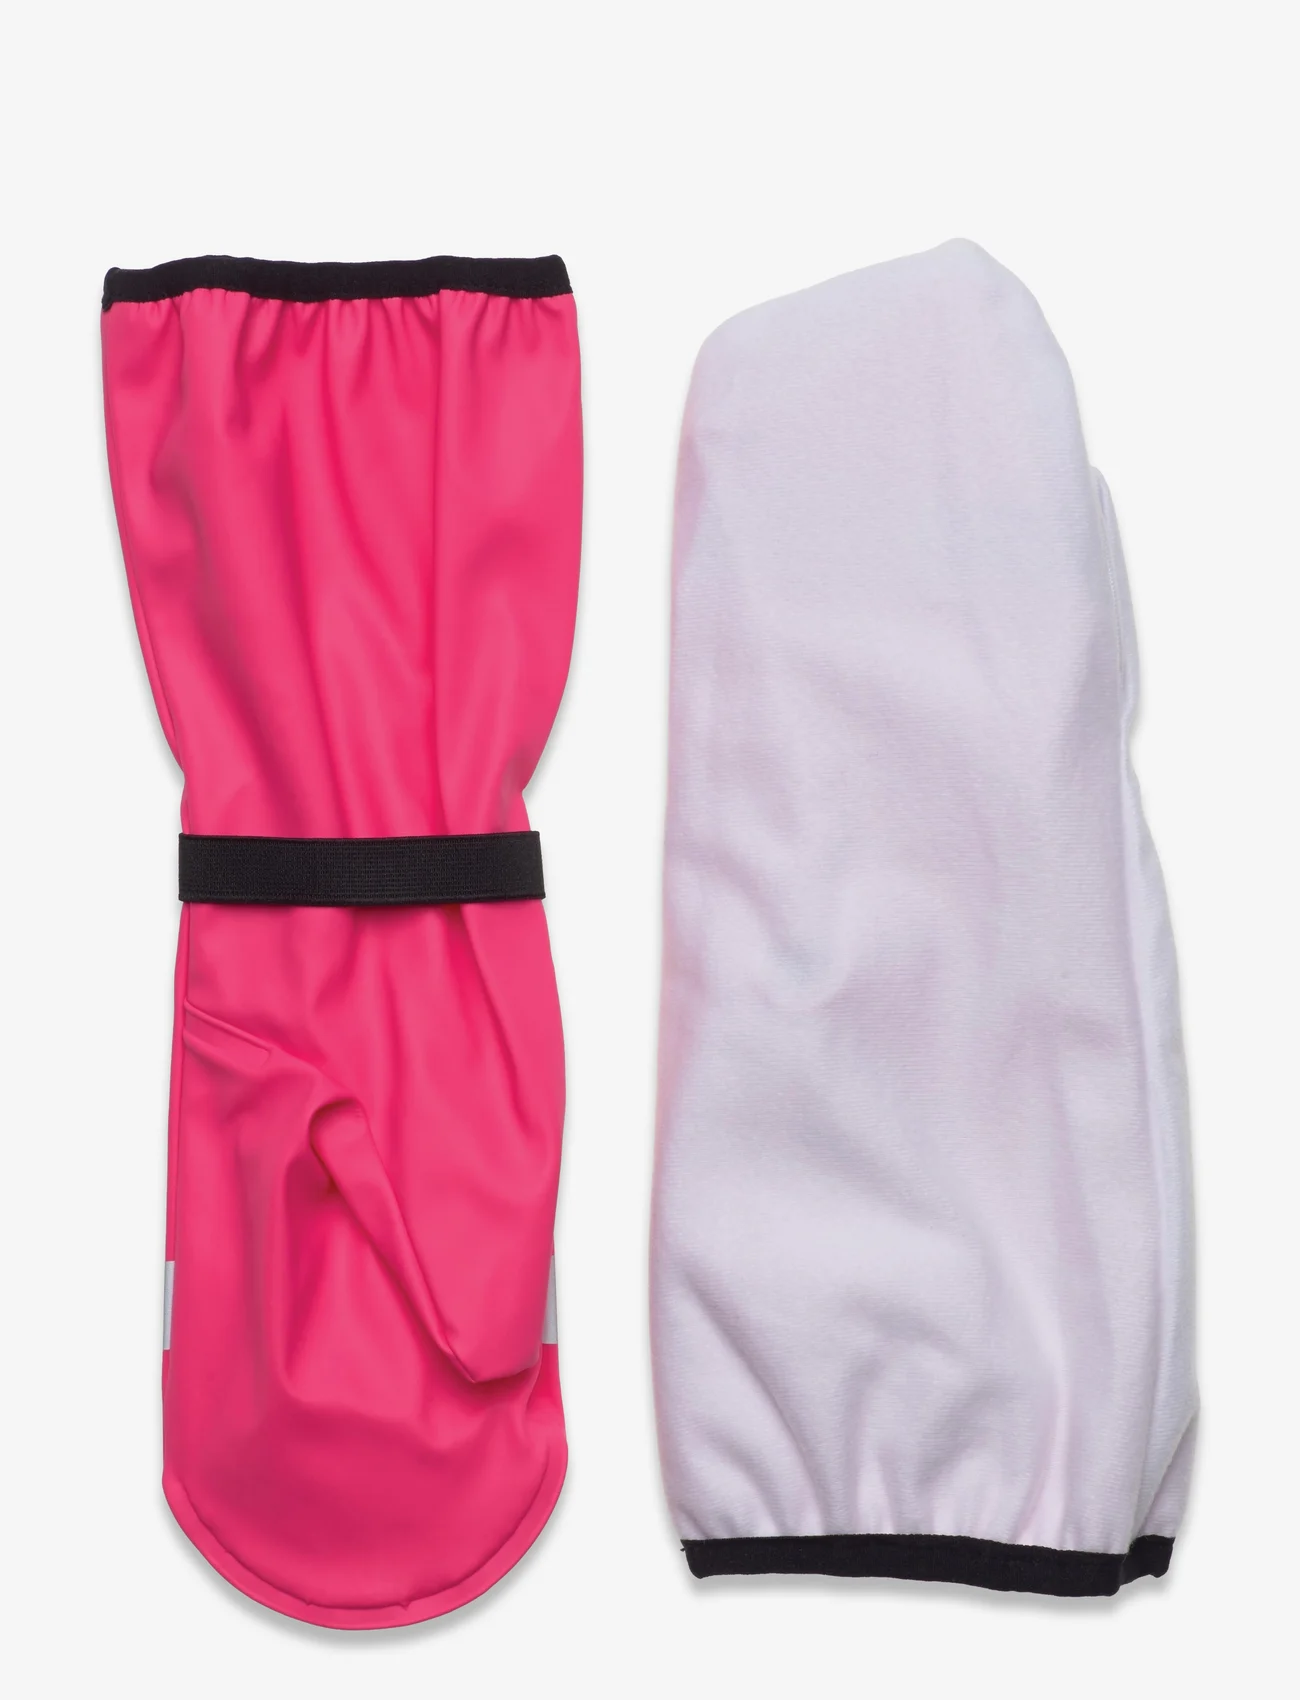 Reima - Rain mittens, Puro - lowest prices - candy pink - 1